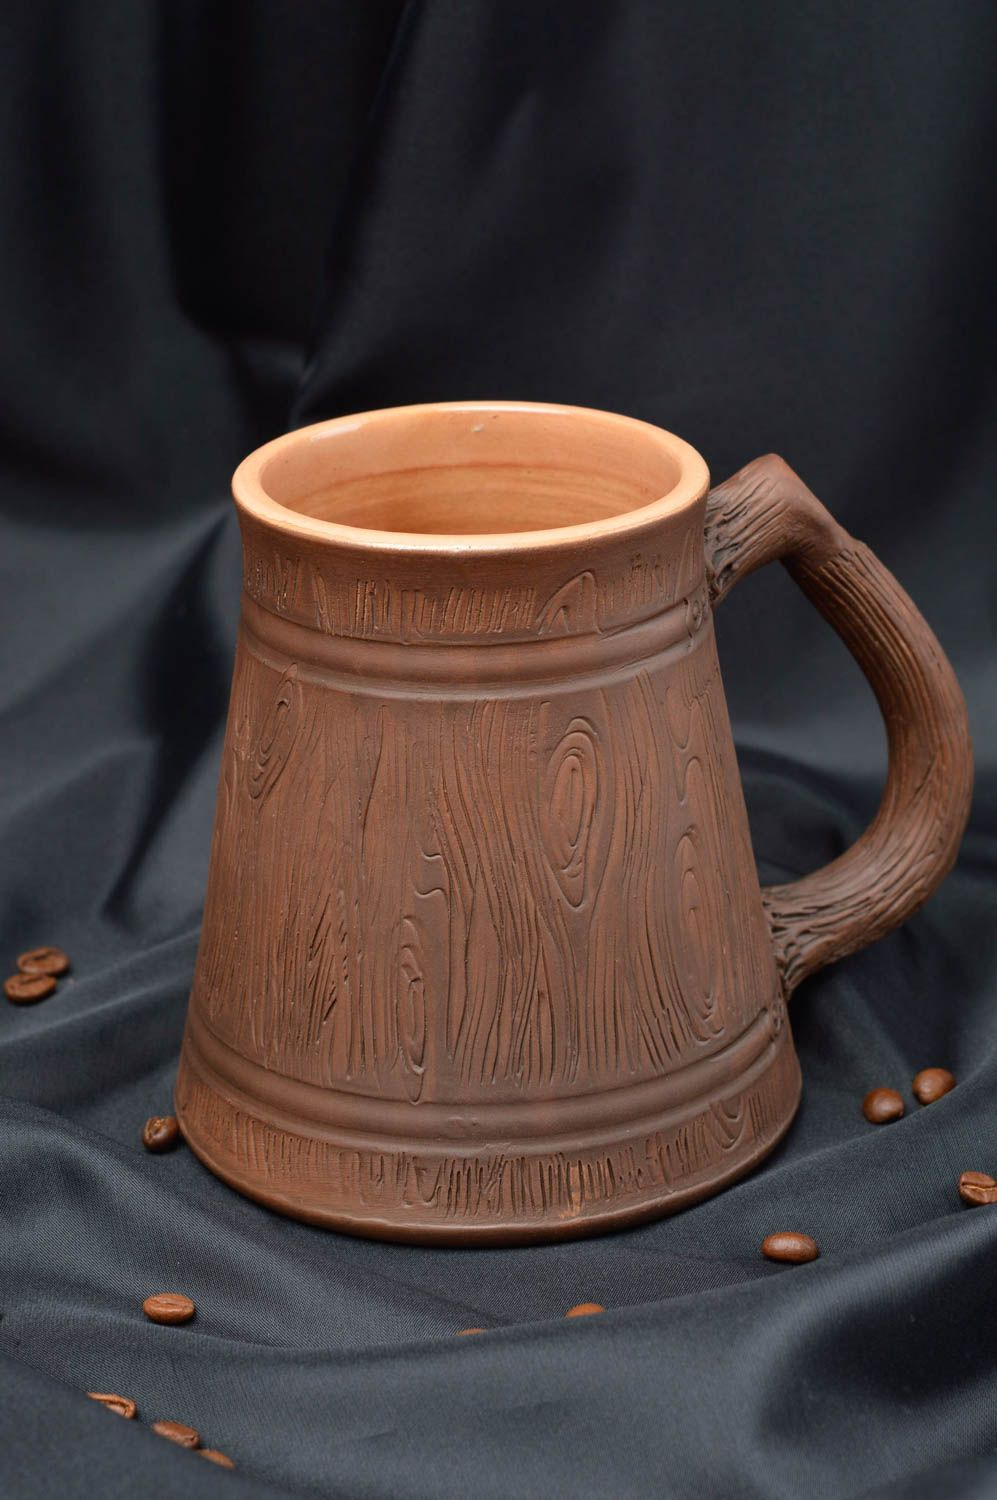 16 oz ceramic large clay drinking mug 1,26 lb photo 1